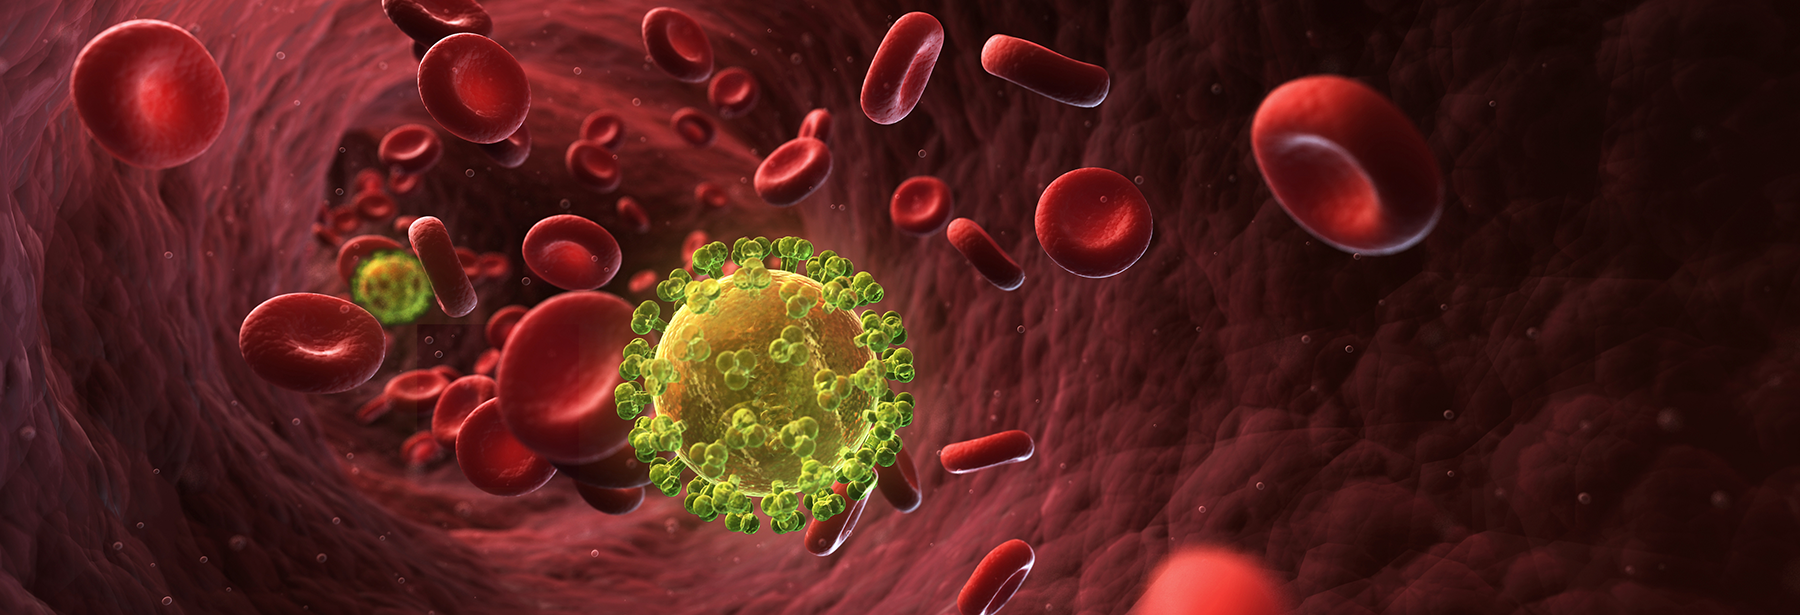 HIV in Blood Stream Illustration